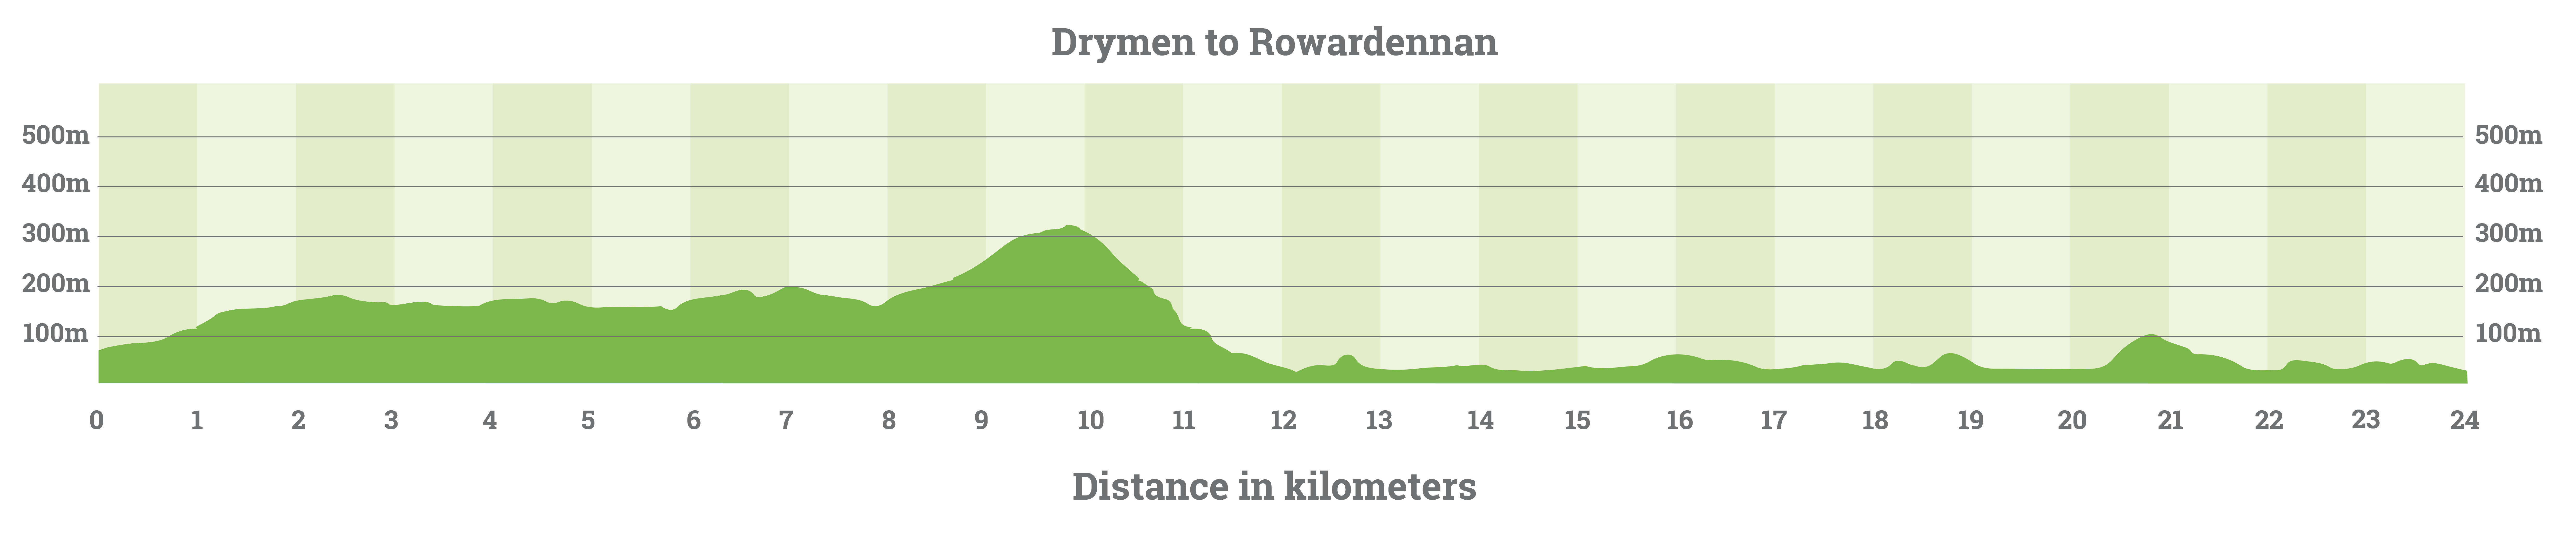 drymen-to-rowardennan-elevation